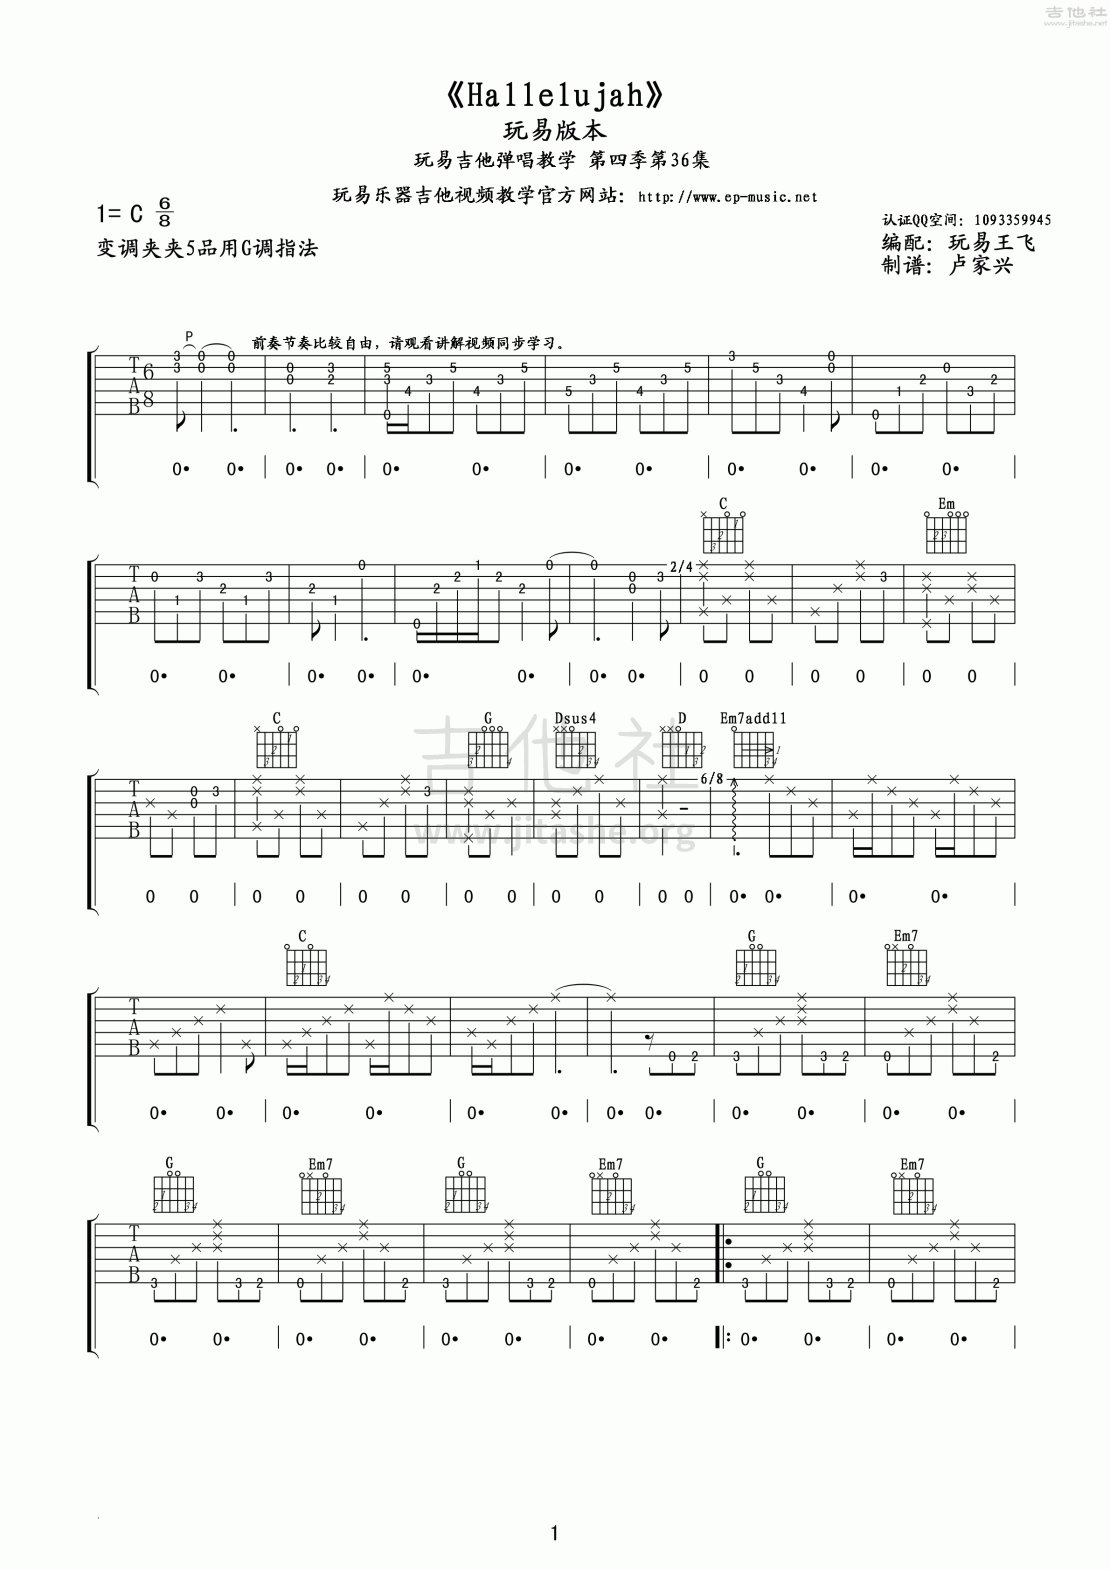 hallelujah(哈利路亚)(玩易吉他弹唱教程:第四季第36集)吉他谱(图片谱